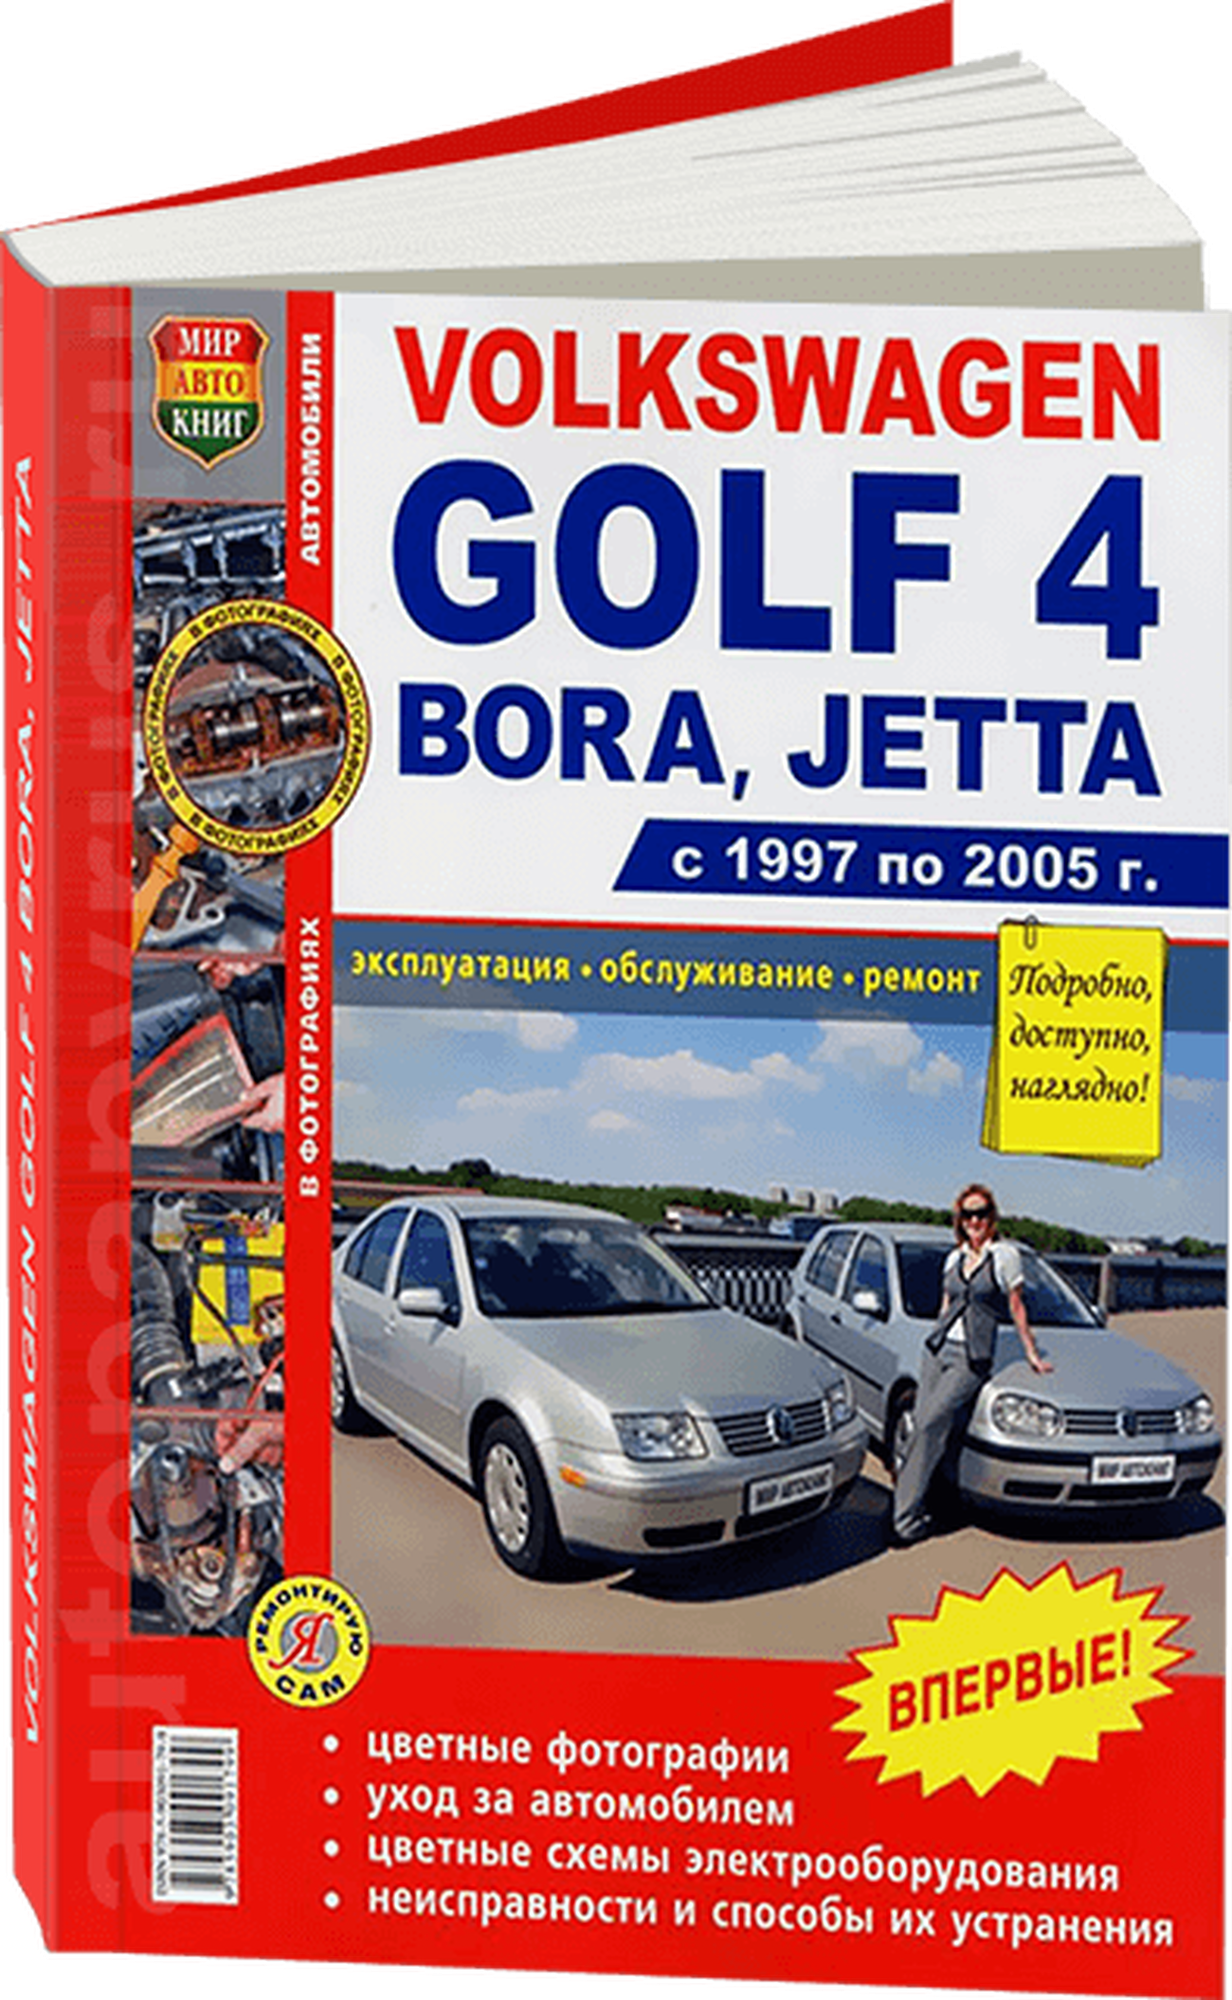 Volkswagen Golf 4 Bora Jetta (Шульгин) - фото №2